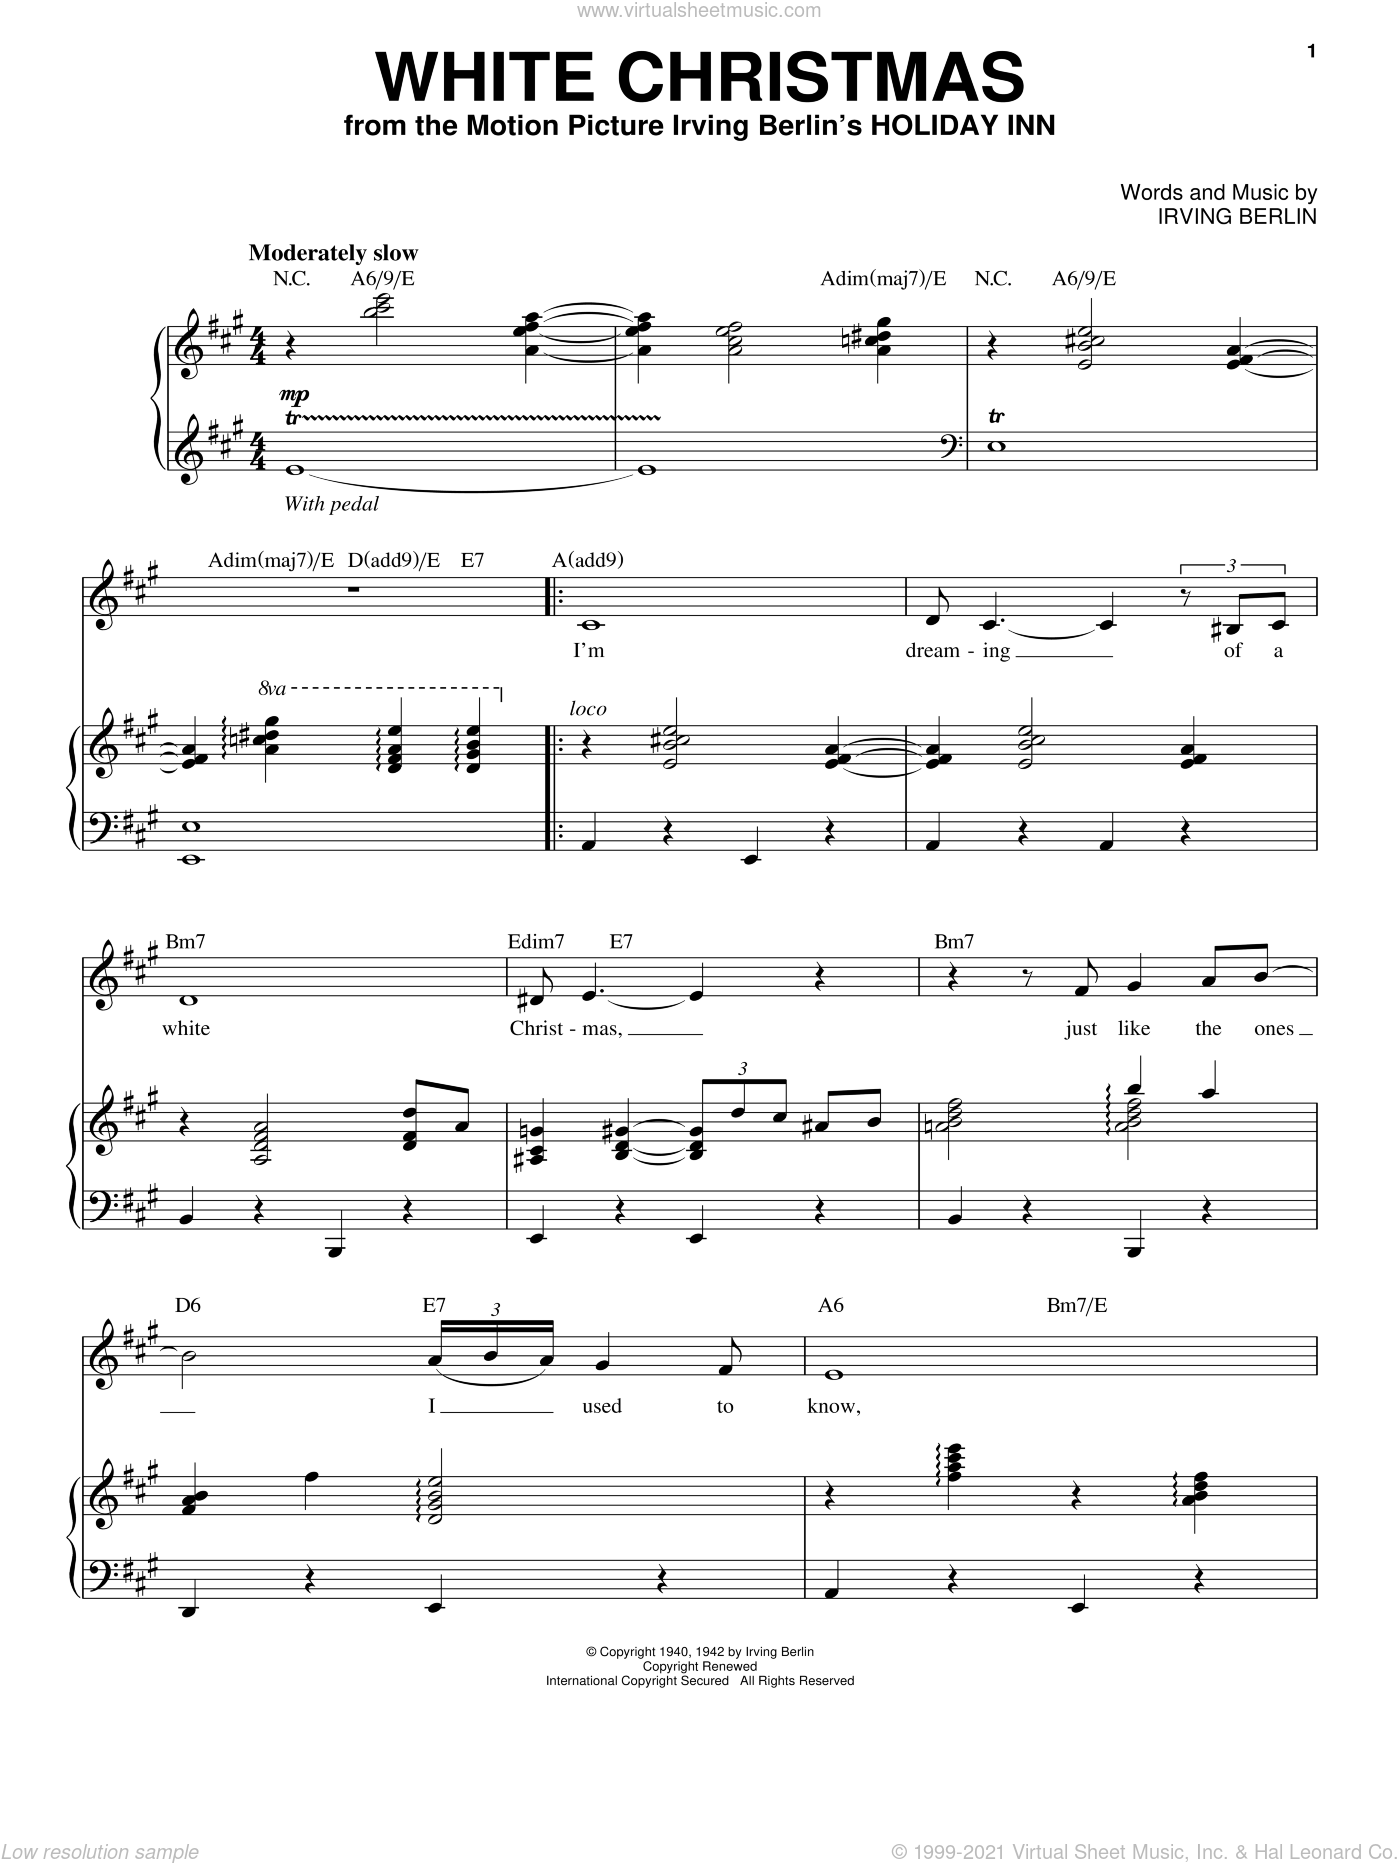 printable-white-christmas-sheet-music-pdf-printable-word-searches